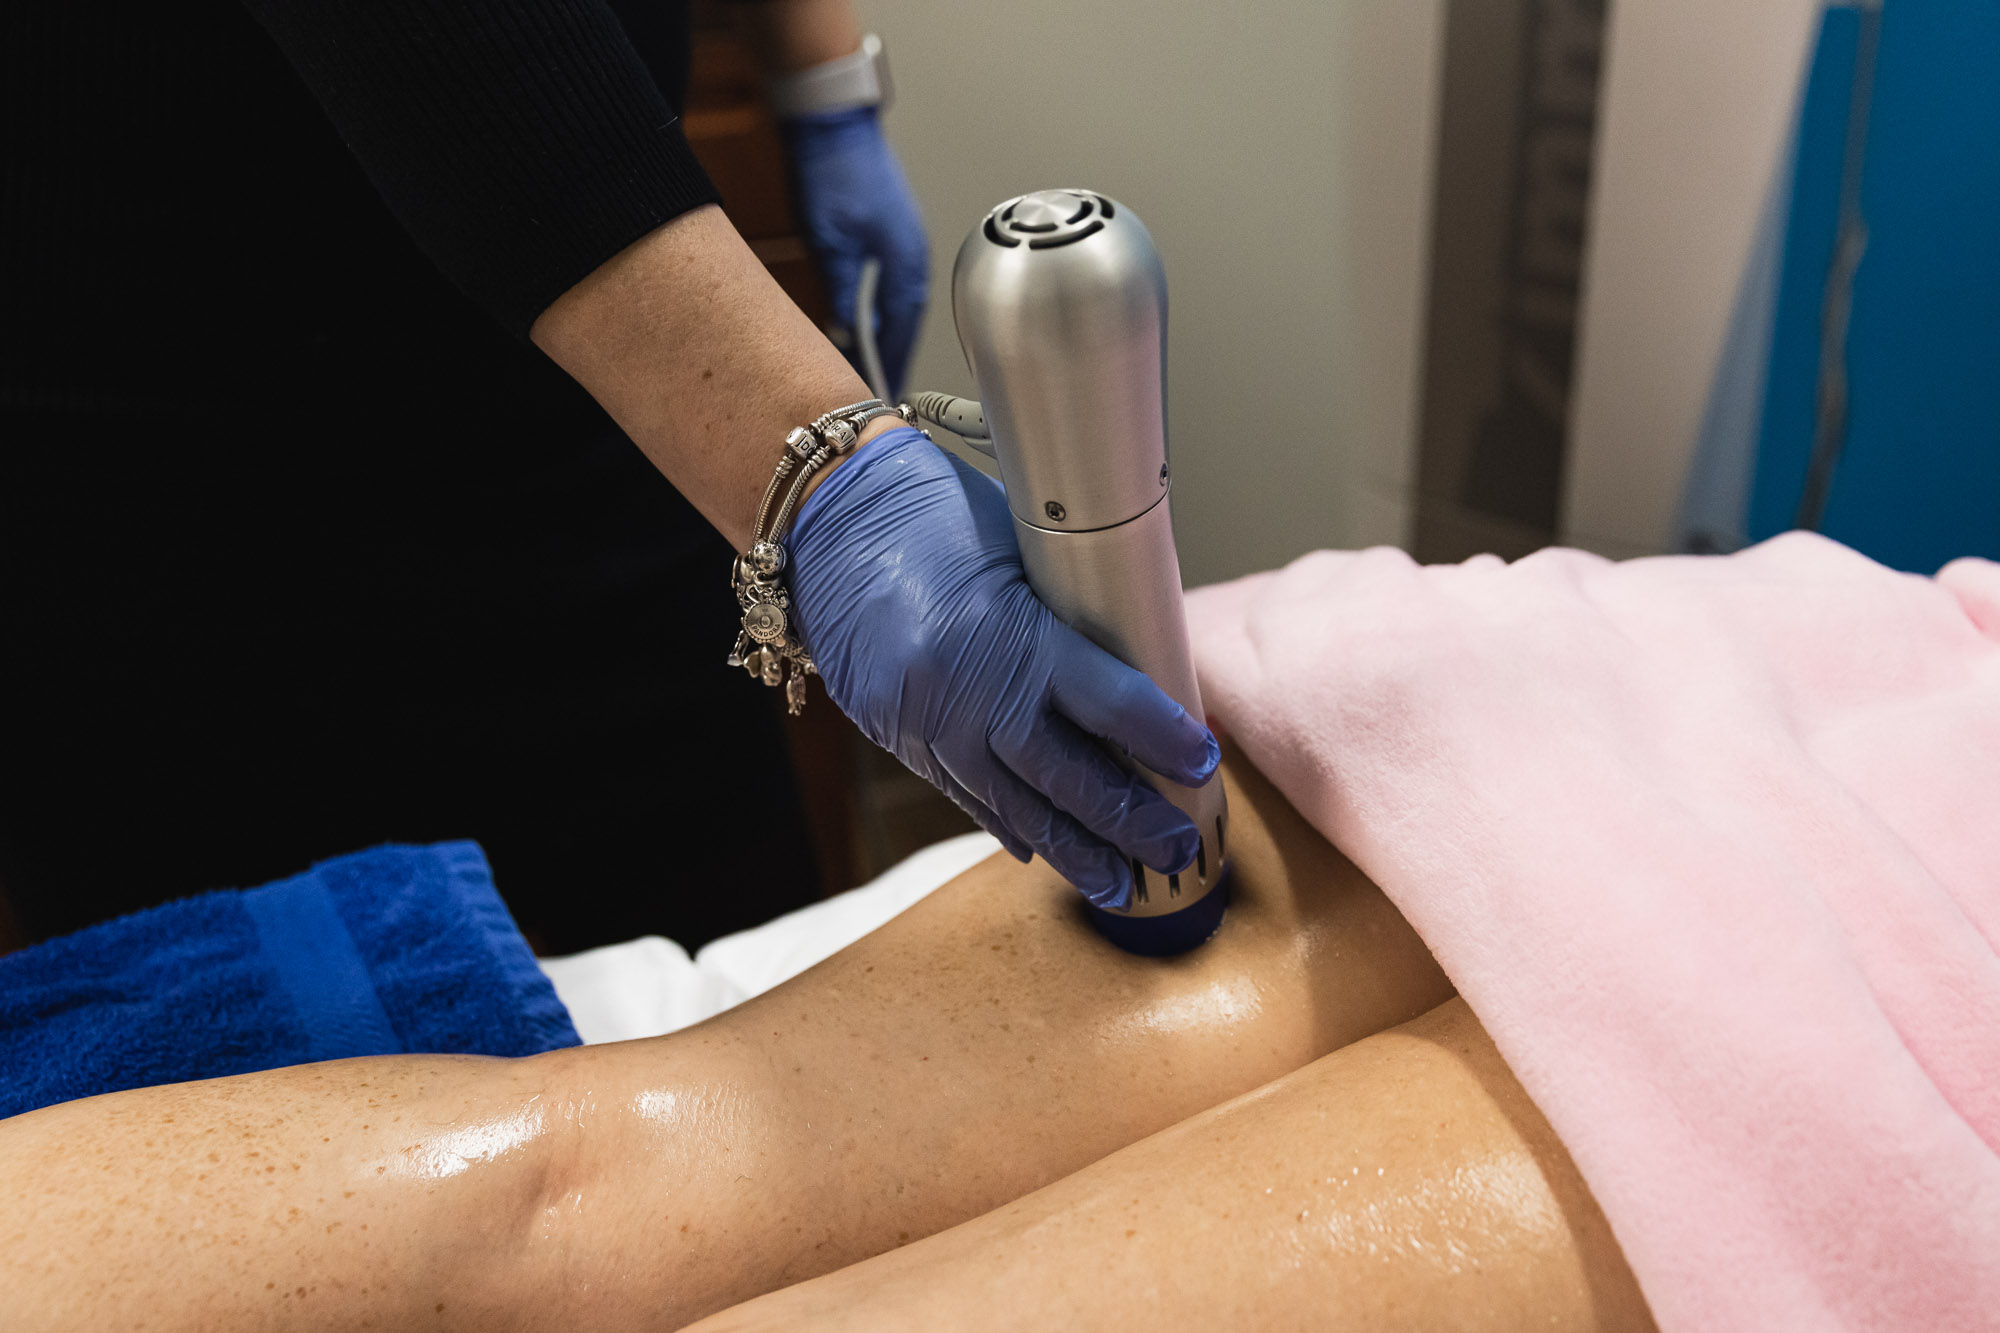 Anti-cellulite treatment at medical spa center, vacuum massage procedure  Stock Photo by leszekglasner